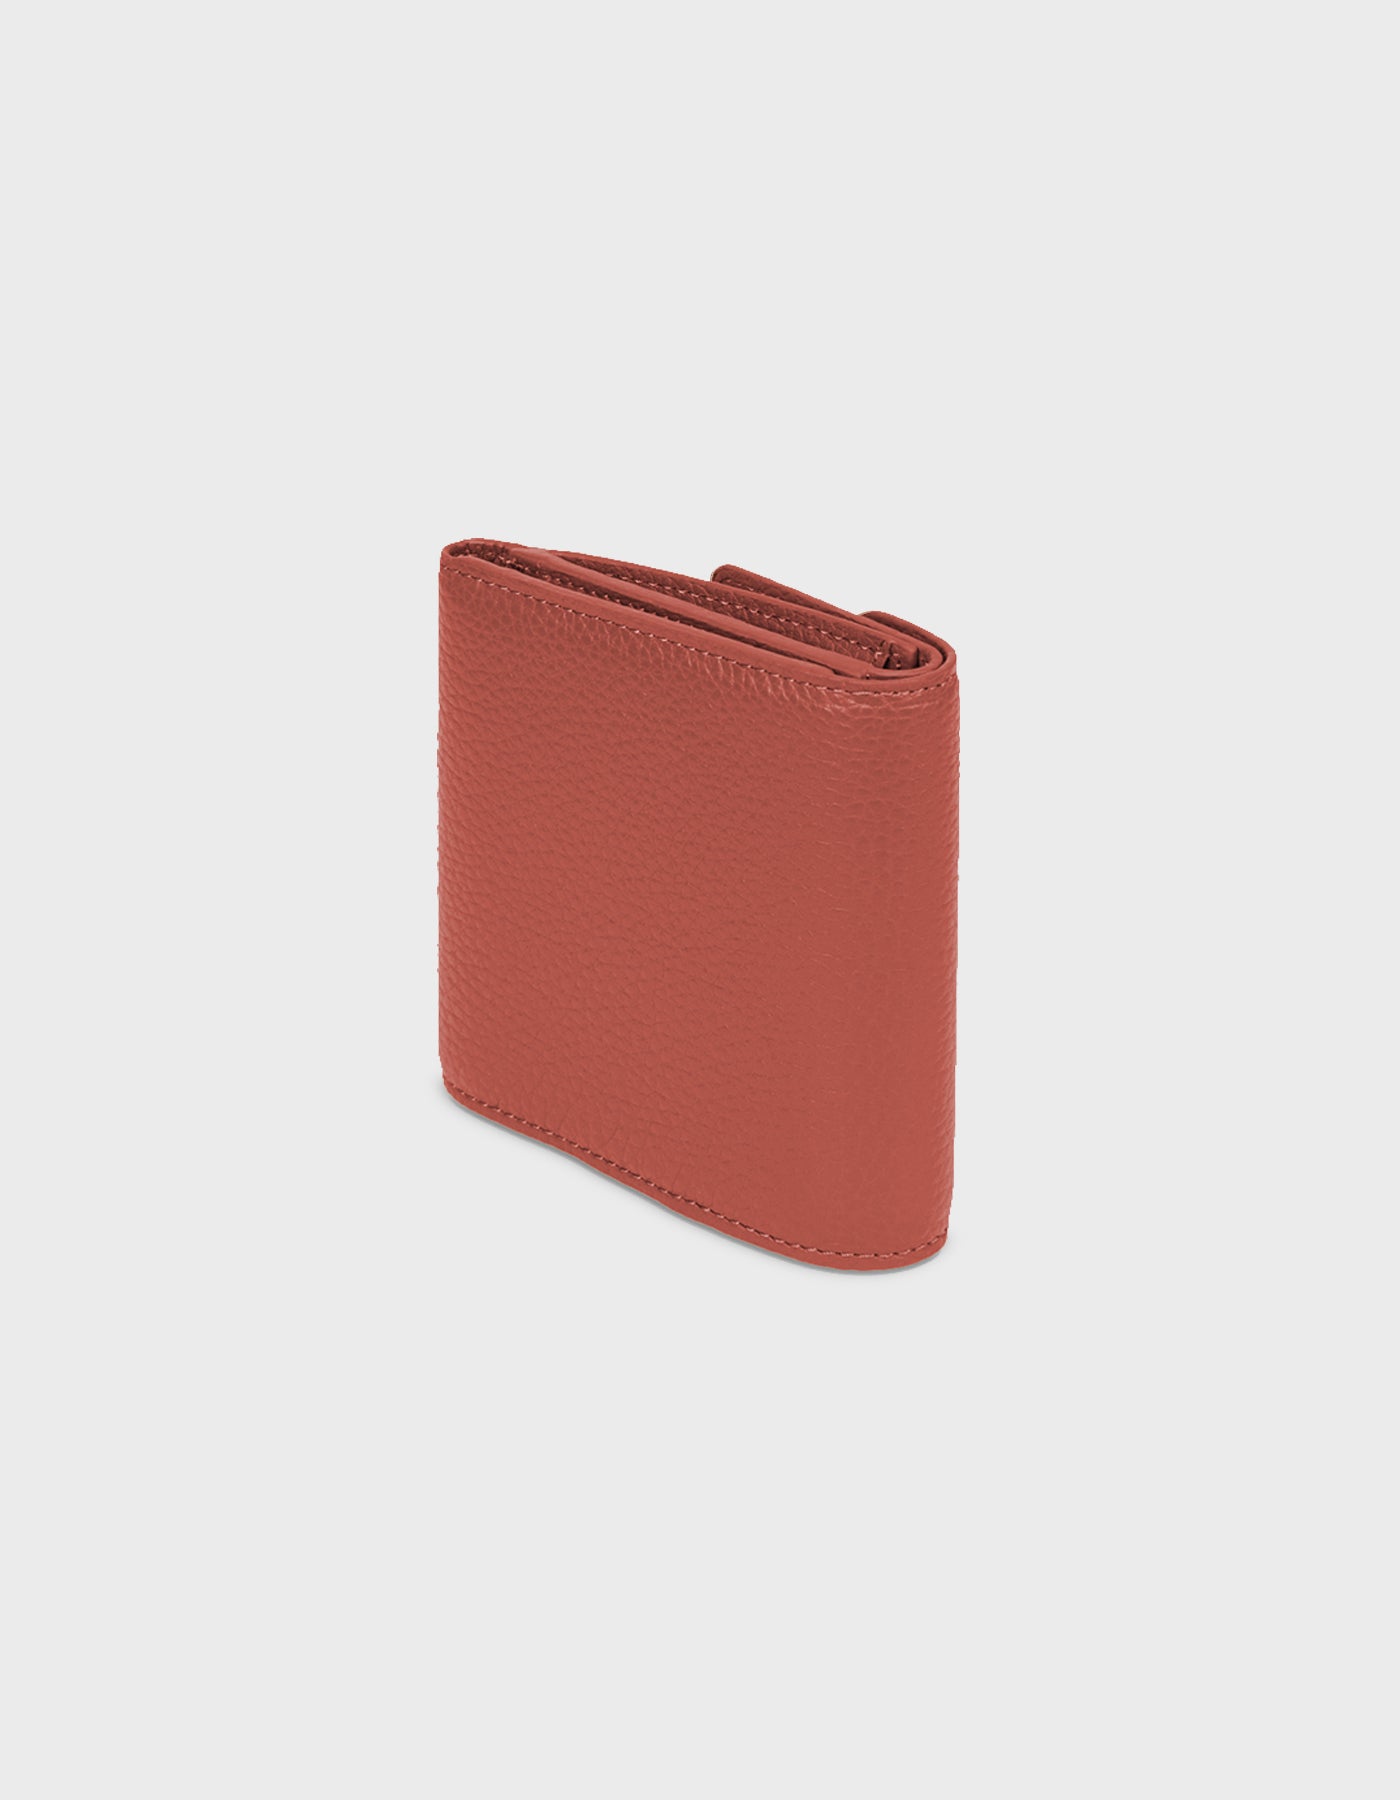 HiVa Atelier | Larus Compact Wallet Ginger | Beautiful and Versatile